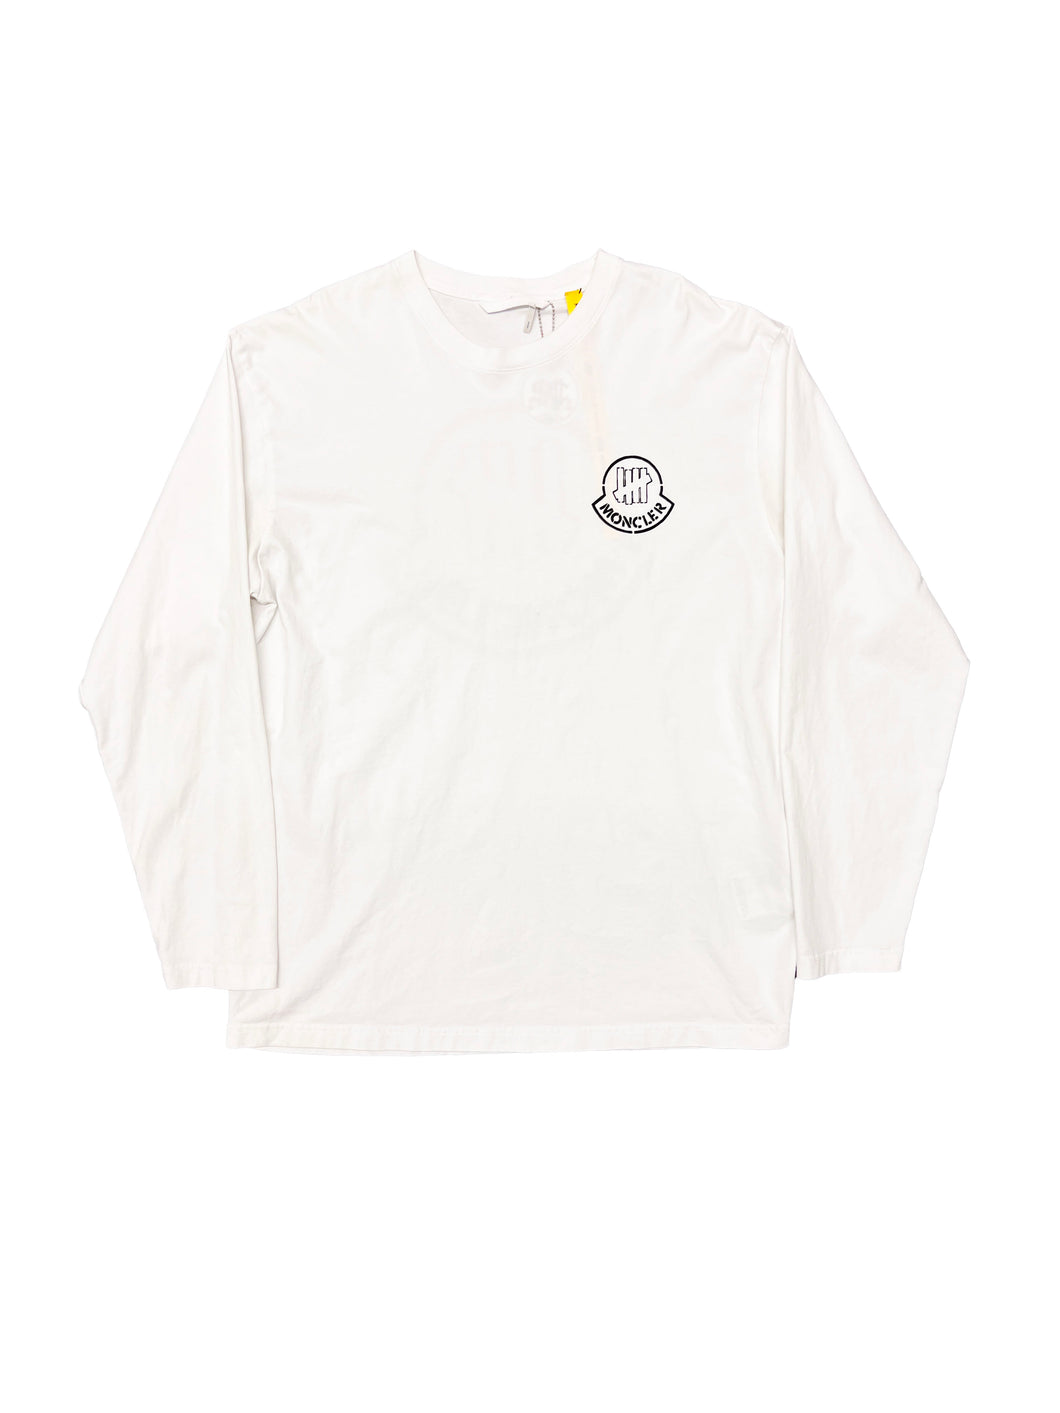 Moncler Long Sleeve White T-Shirt Size Large